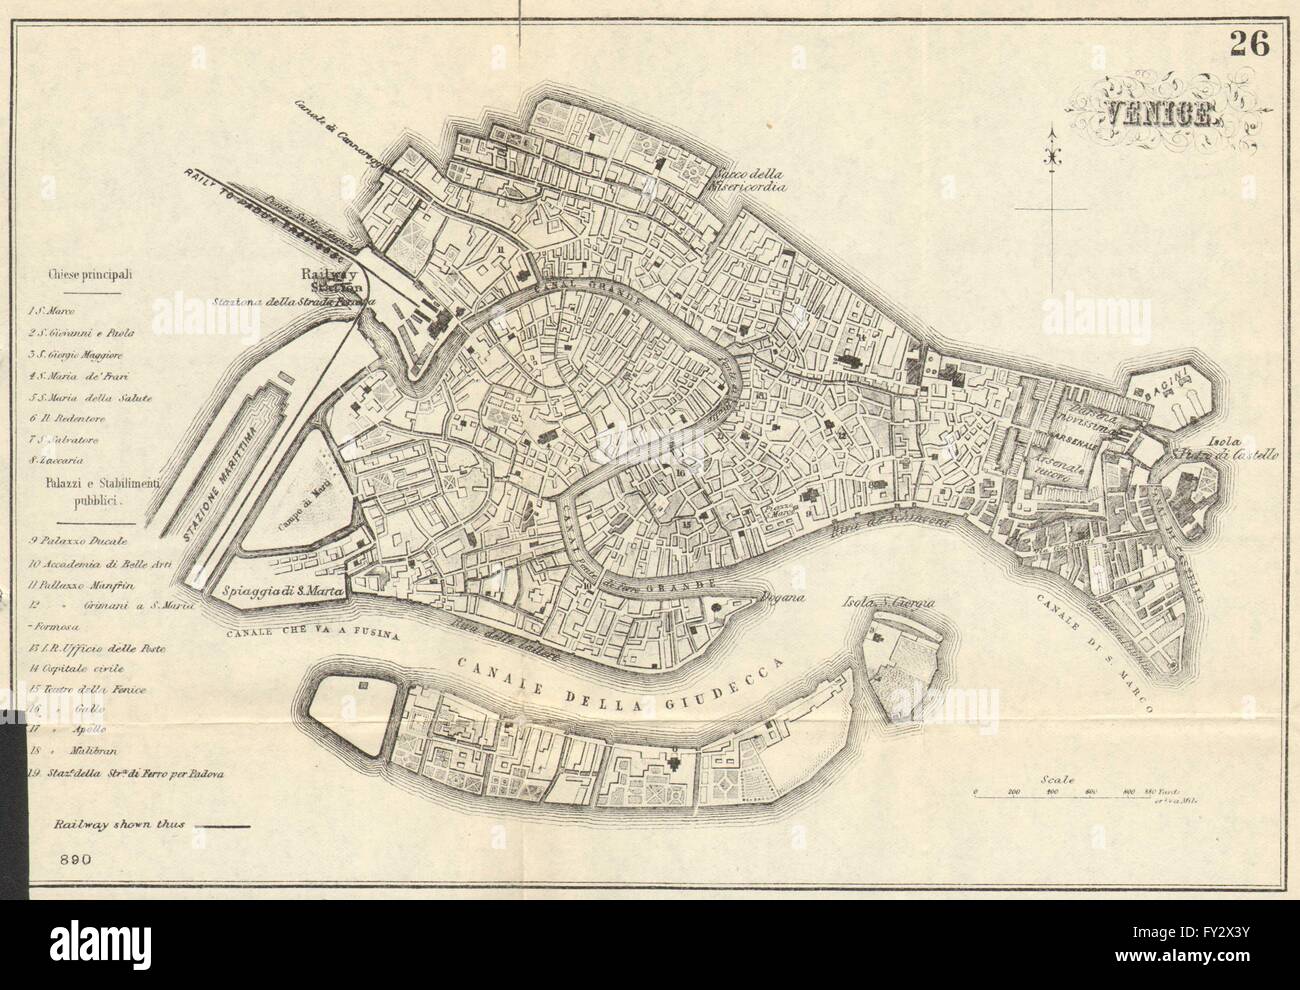 VENICE VENEZIA: Antique town plan. City map. Italy. BRADSHAW, 1890 Stock Photo